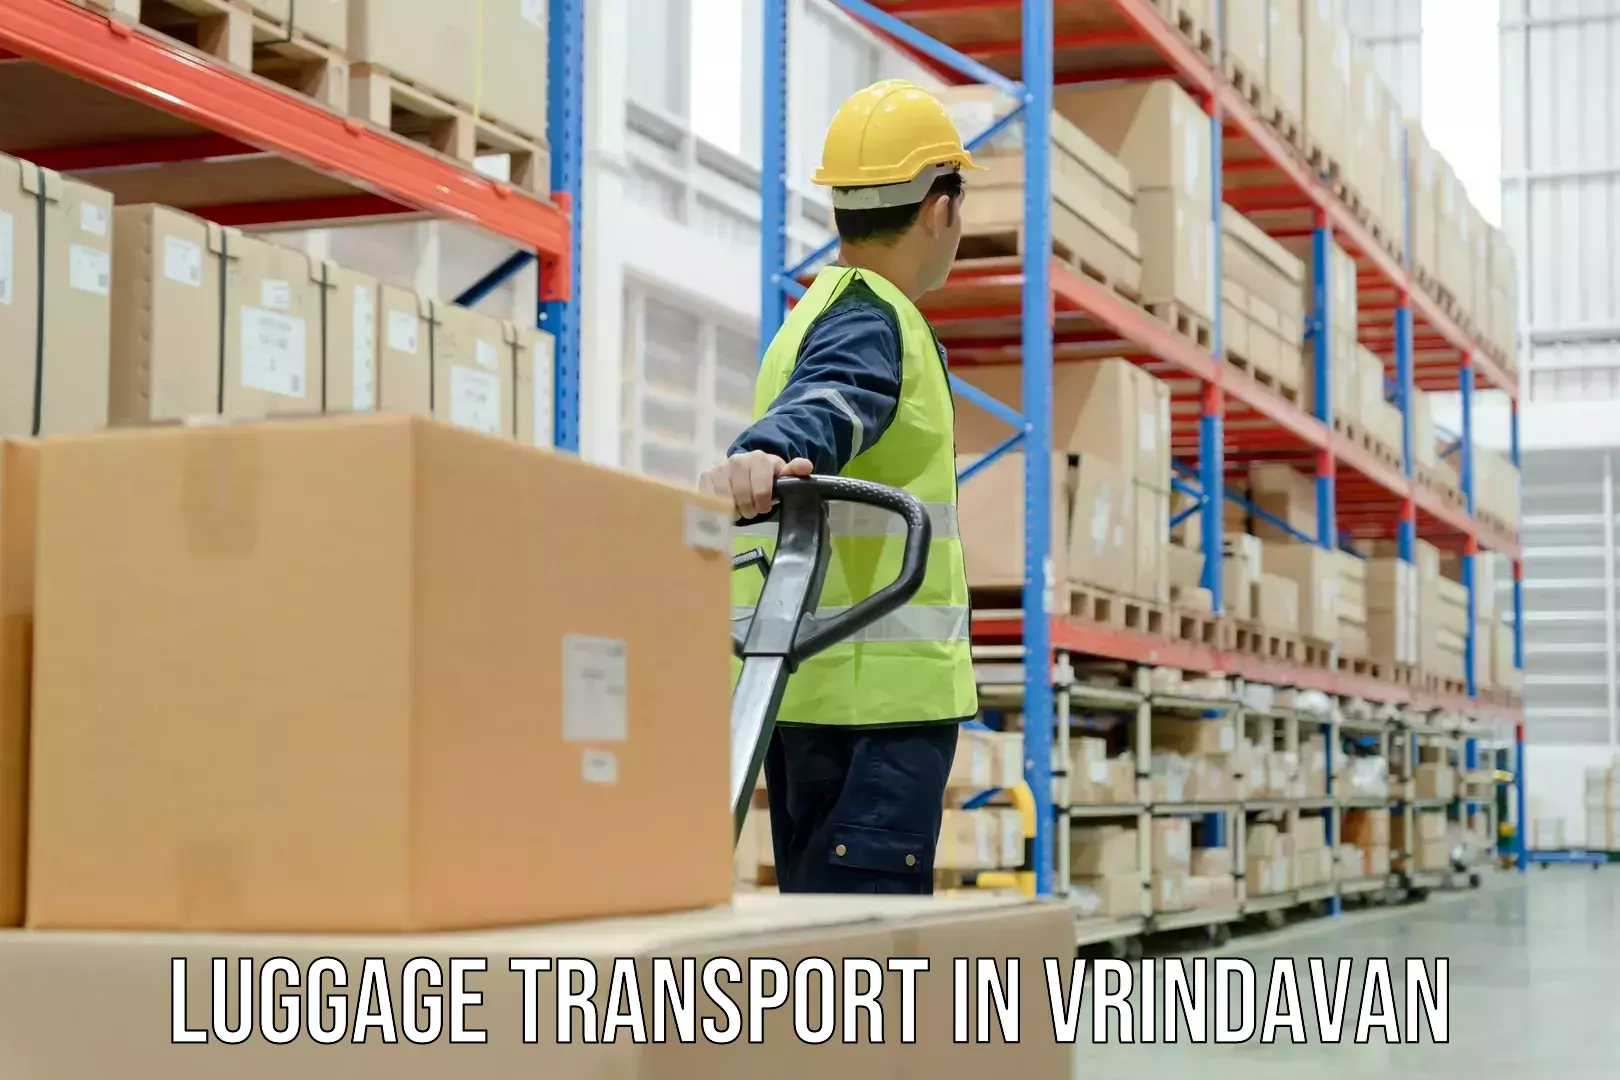 Urgent luggage shipment in Vrindavan